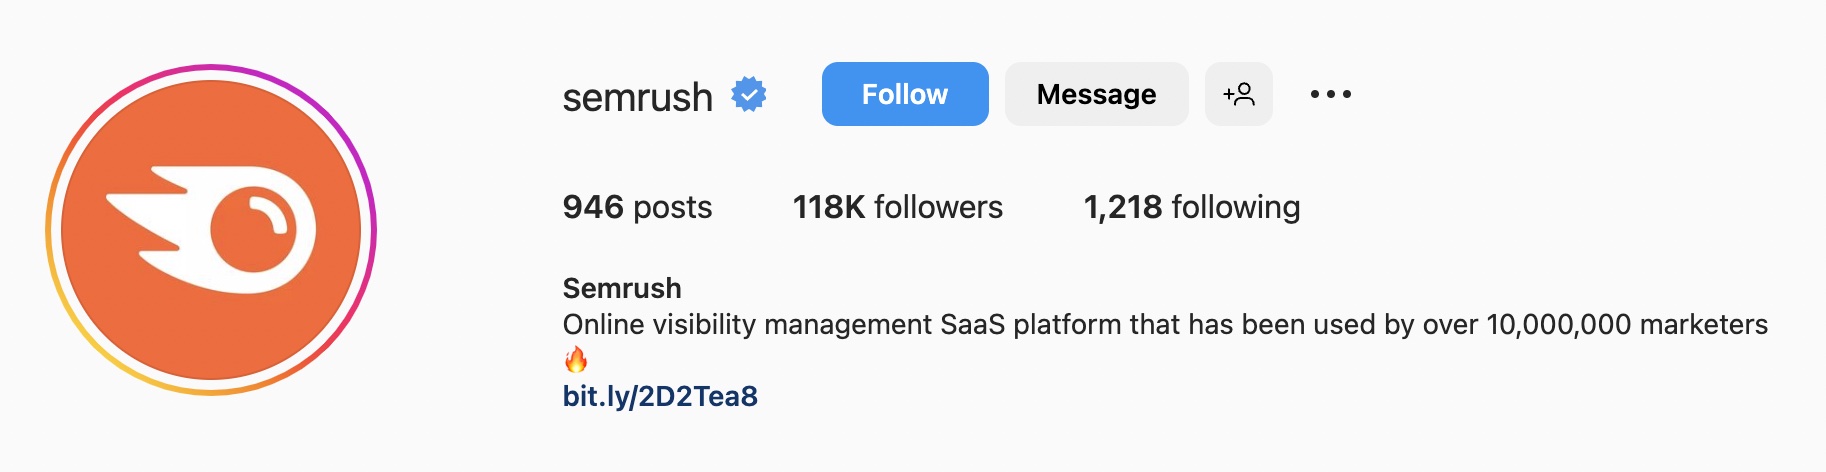 SaaS ビジネスの Instagram バイオ アイデア、semrush